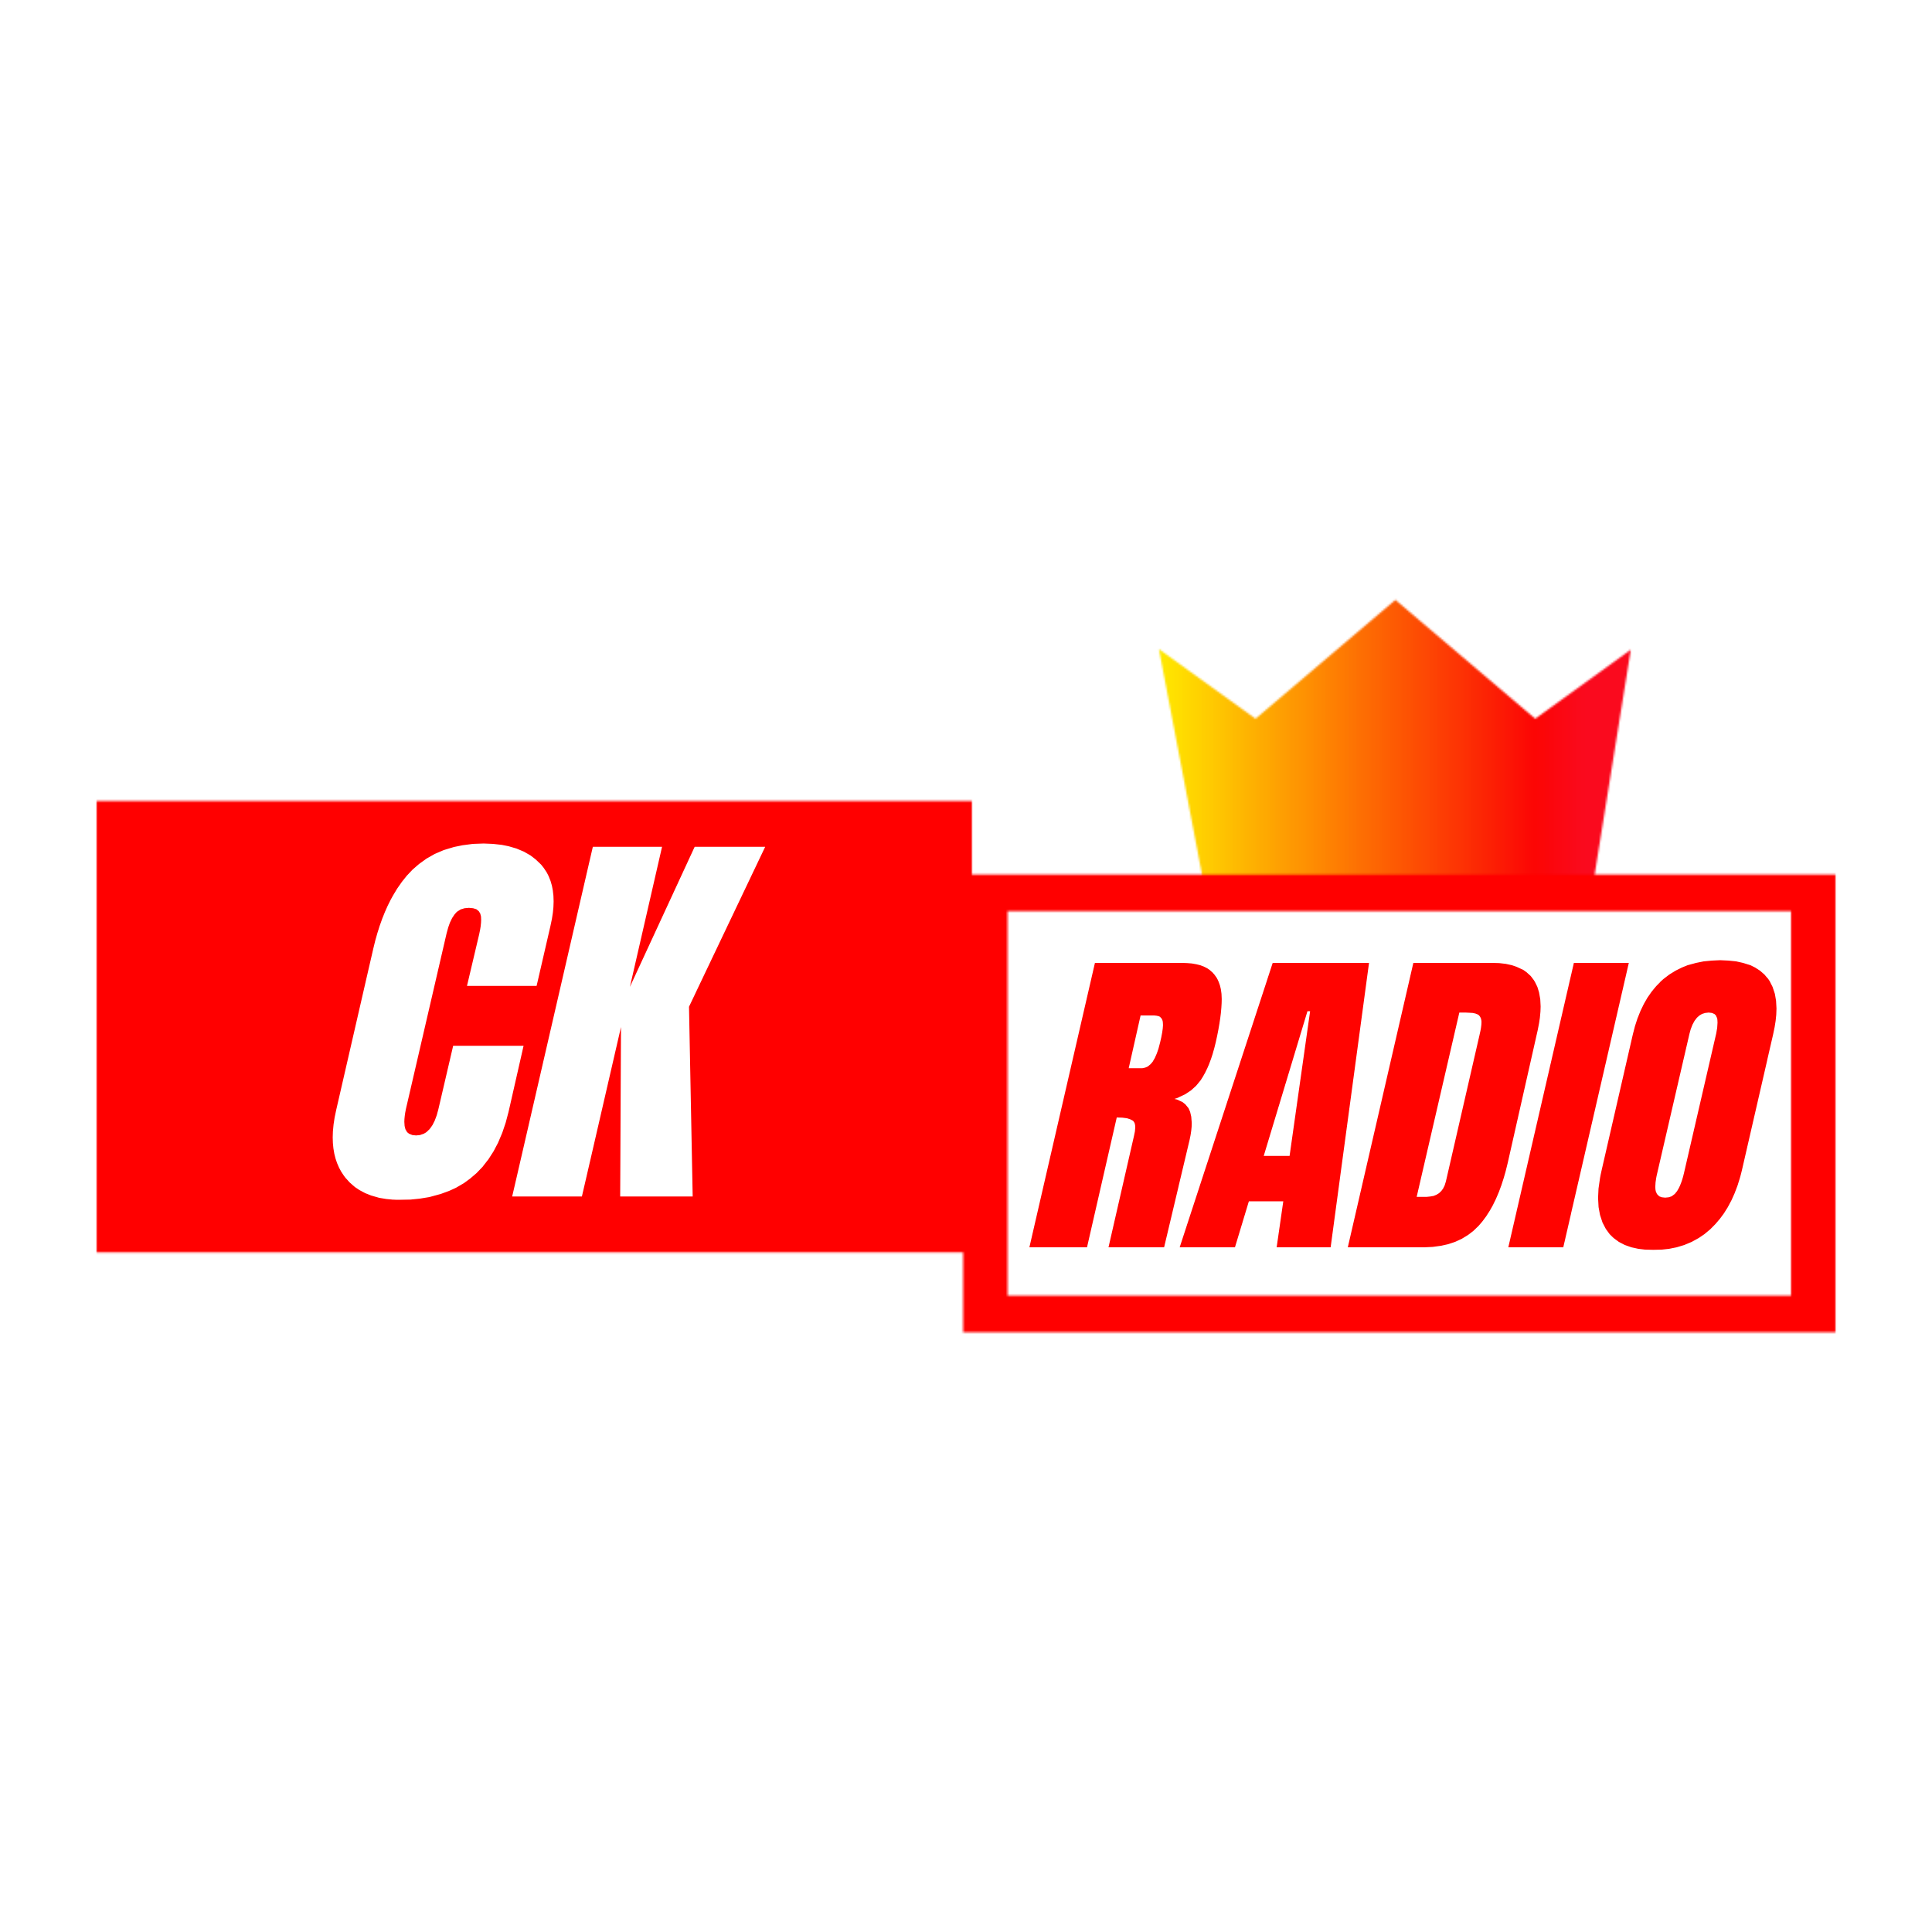 CK RADIO TRANSPARENT.png (103 KB)